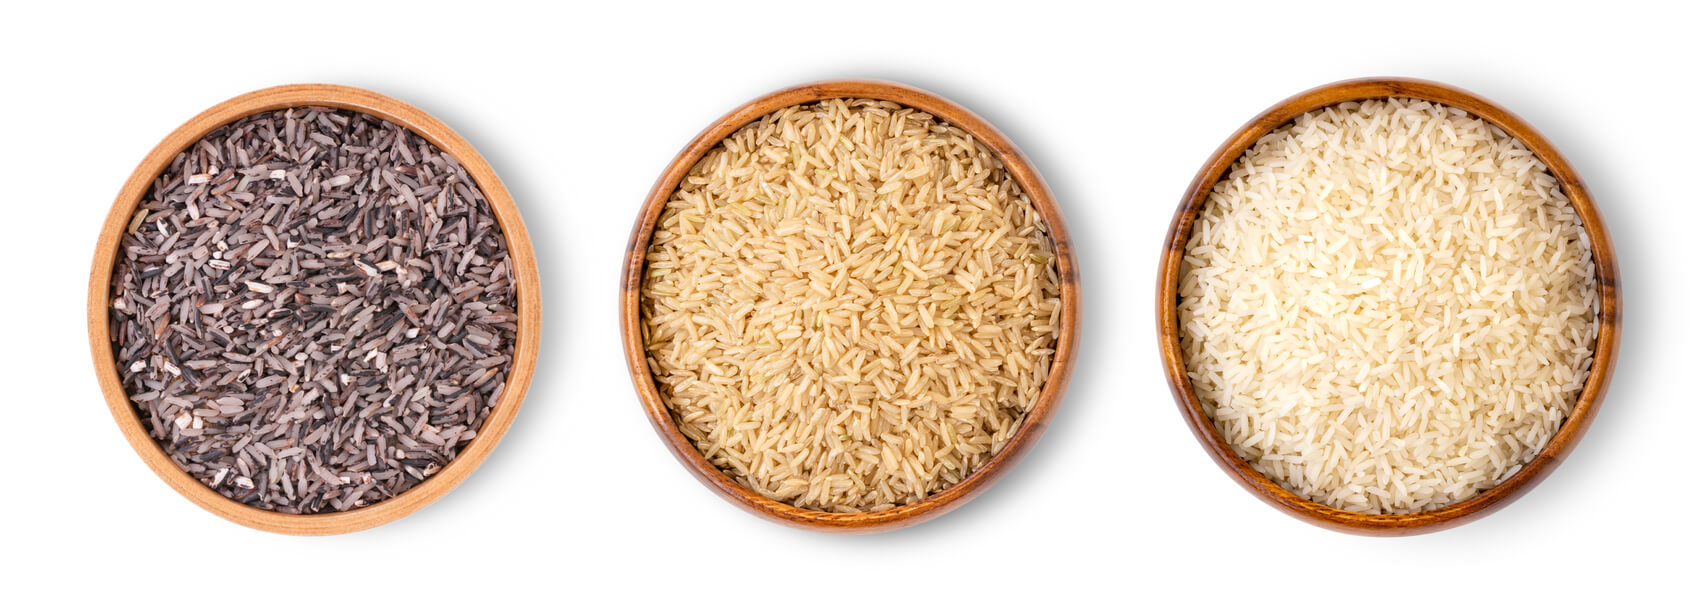 arroz banasti yamani integral